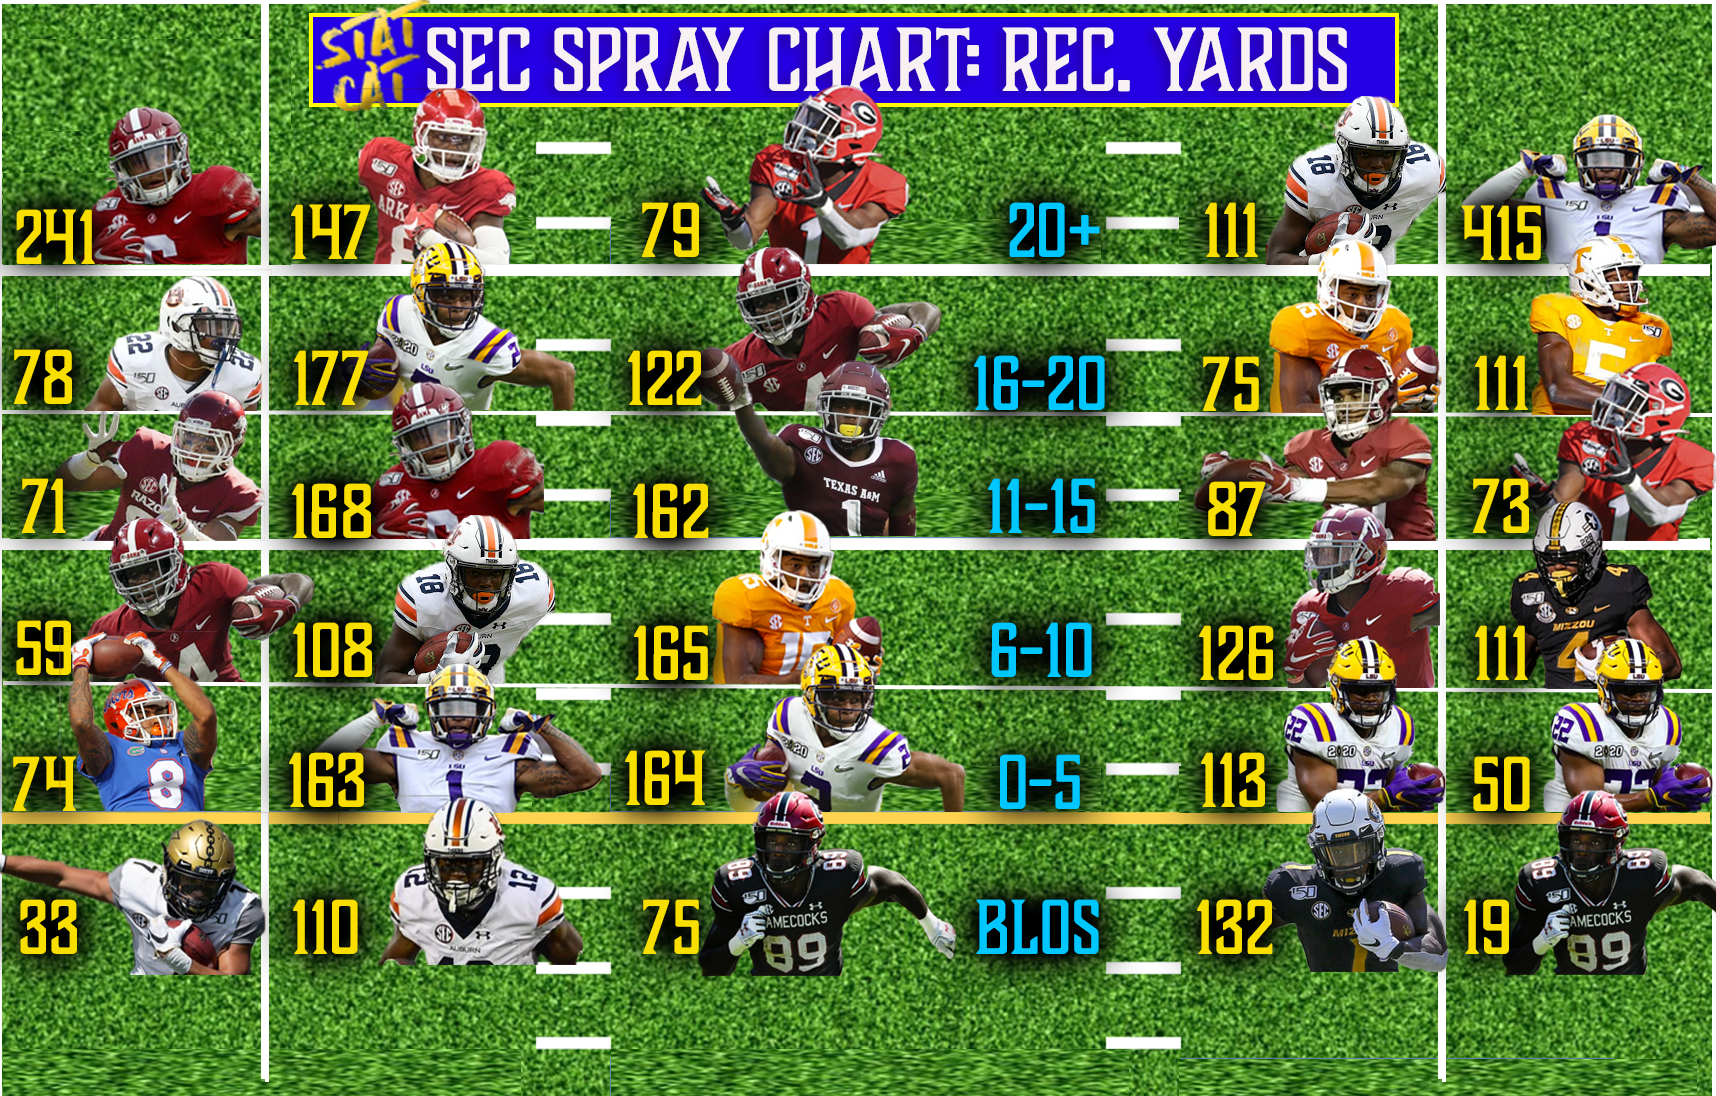 2019 Spray Chart: Catcher Yards